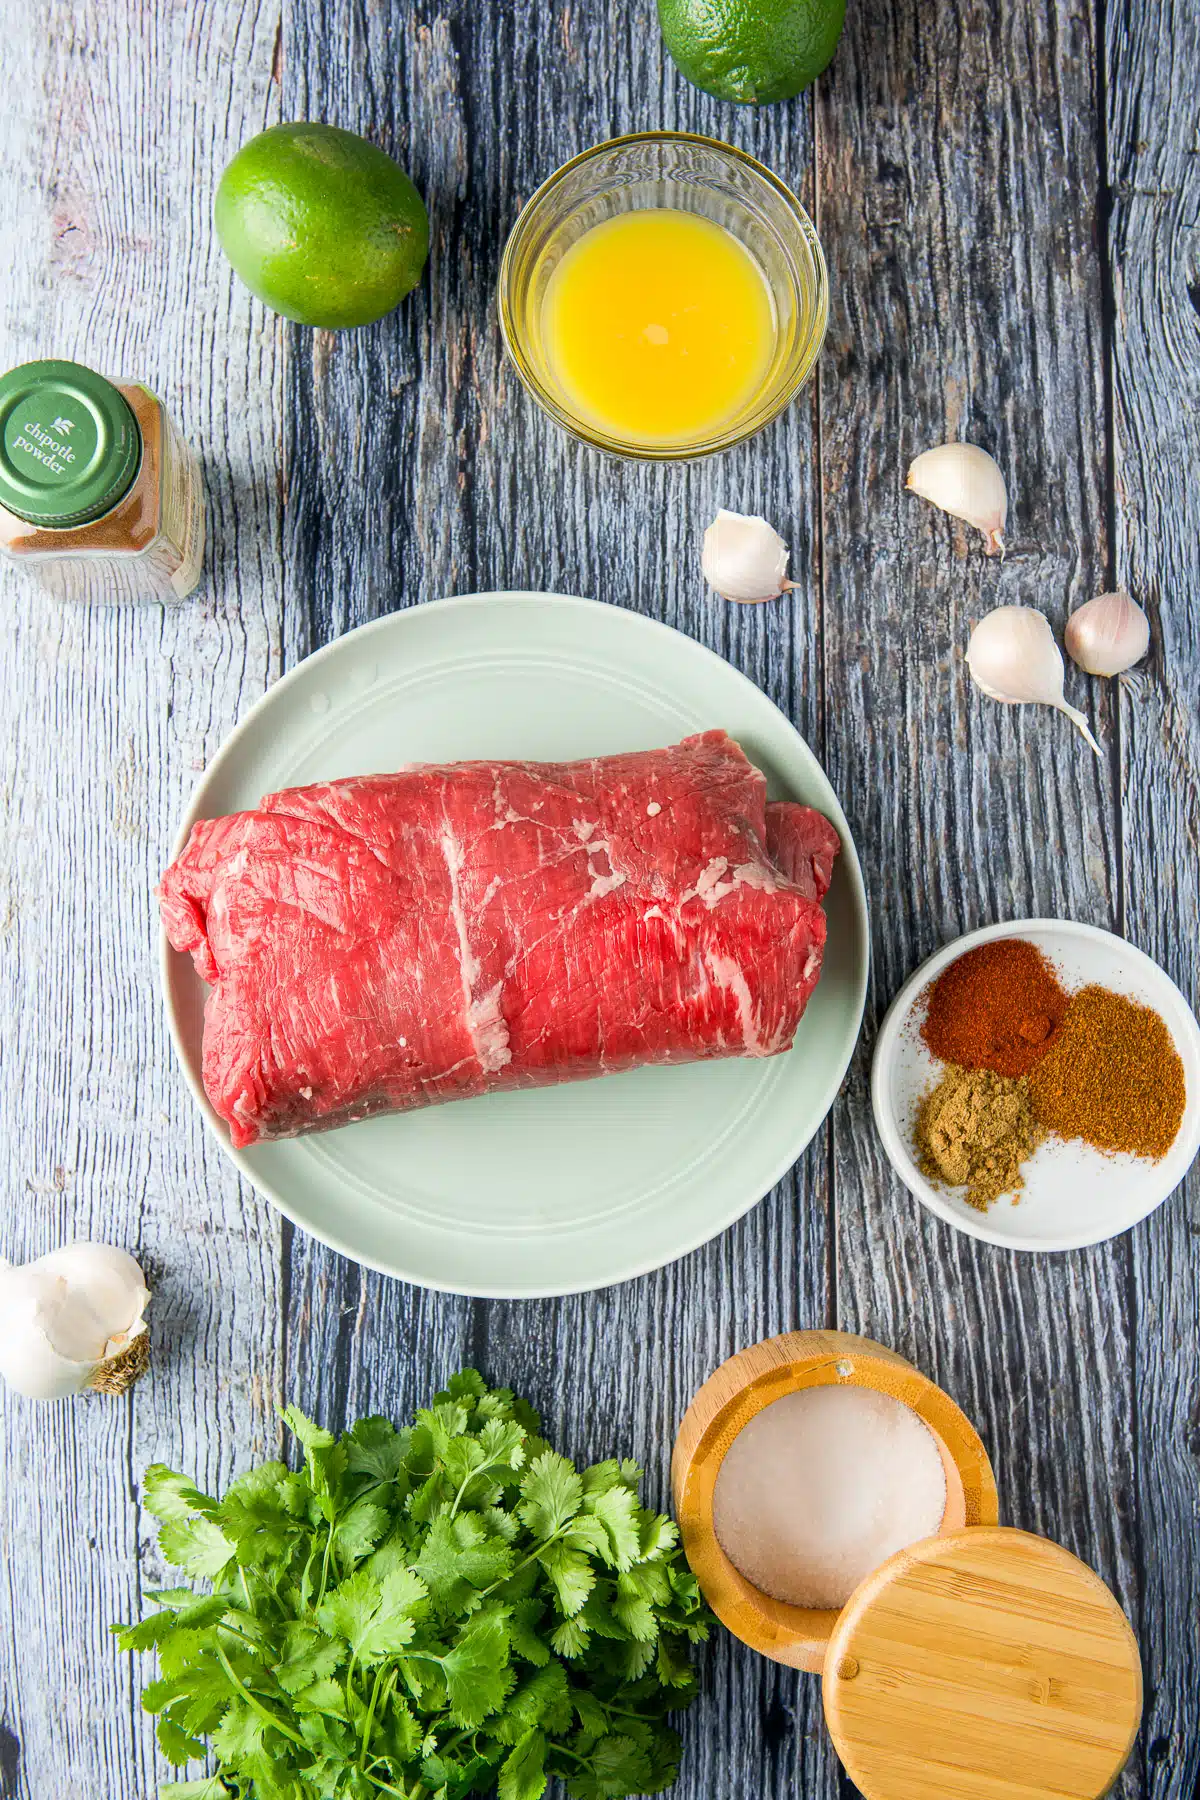 Overhead view of ingredients for a steak taco - steak, cilantro, lime, orange juice, garlic, and salt